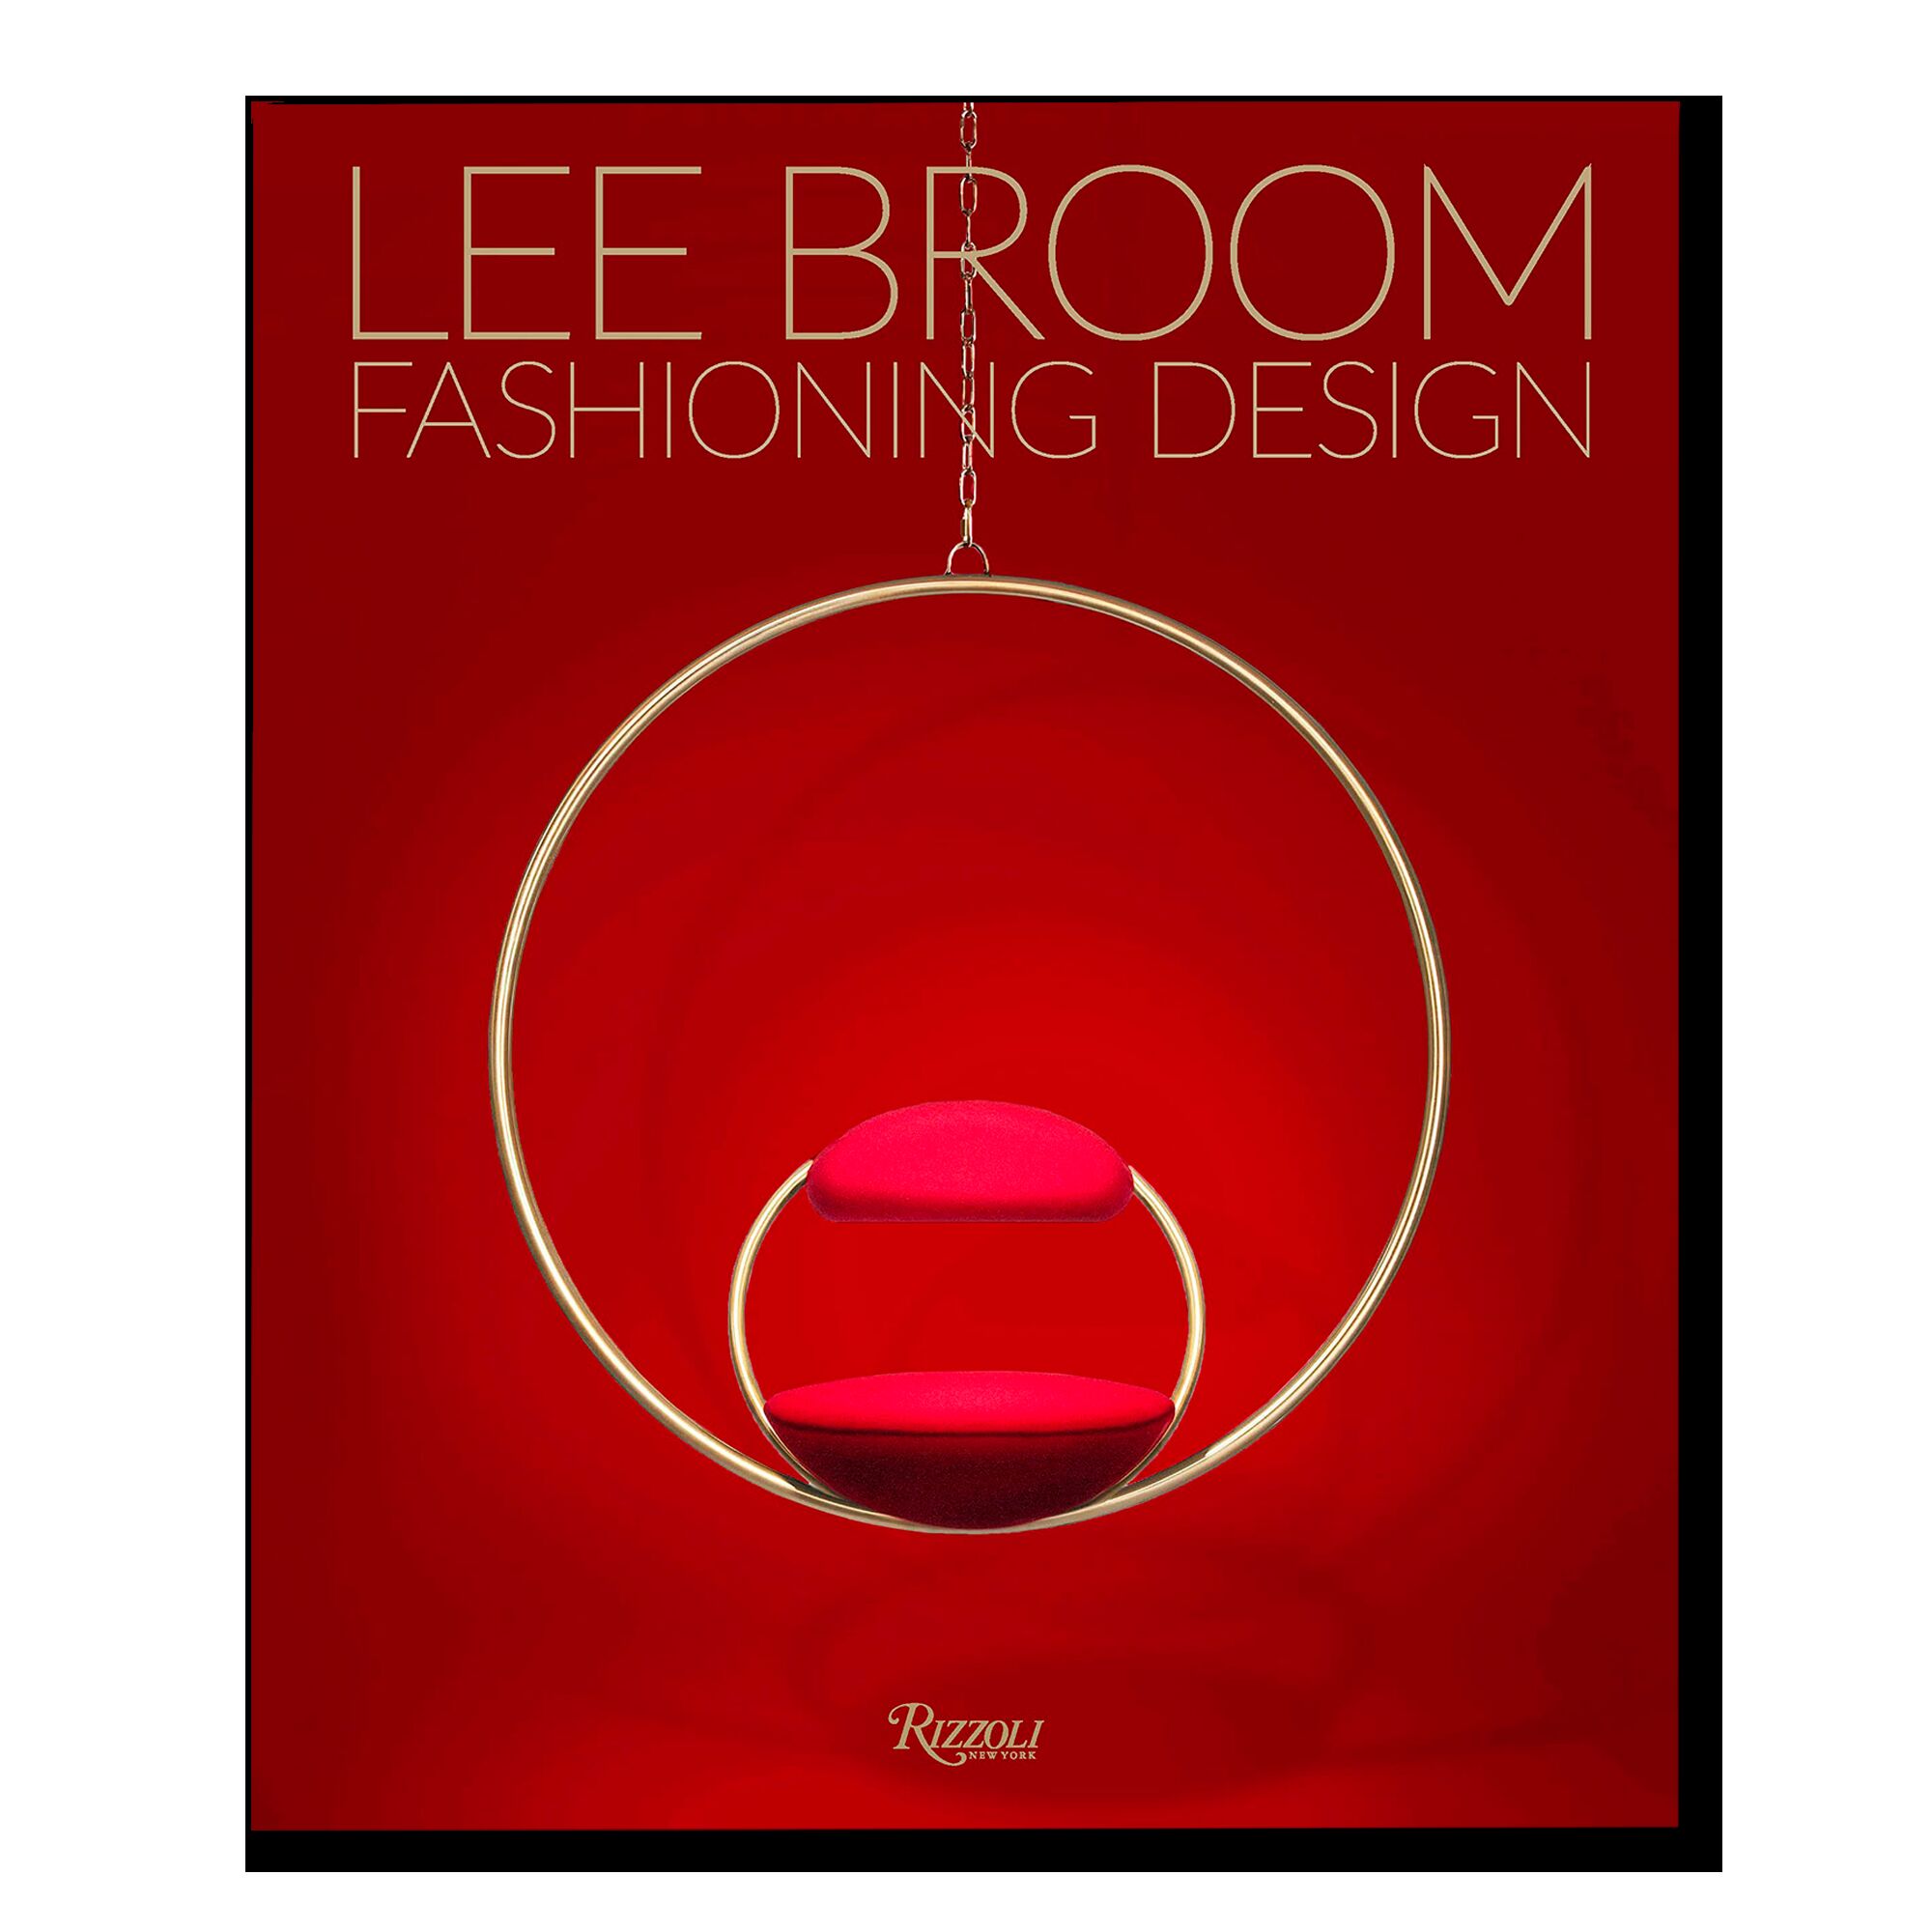 Fashioning Design: Lee Broom